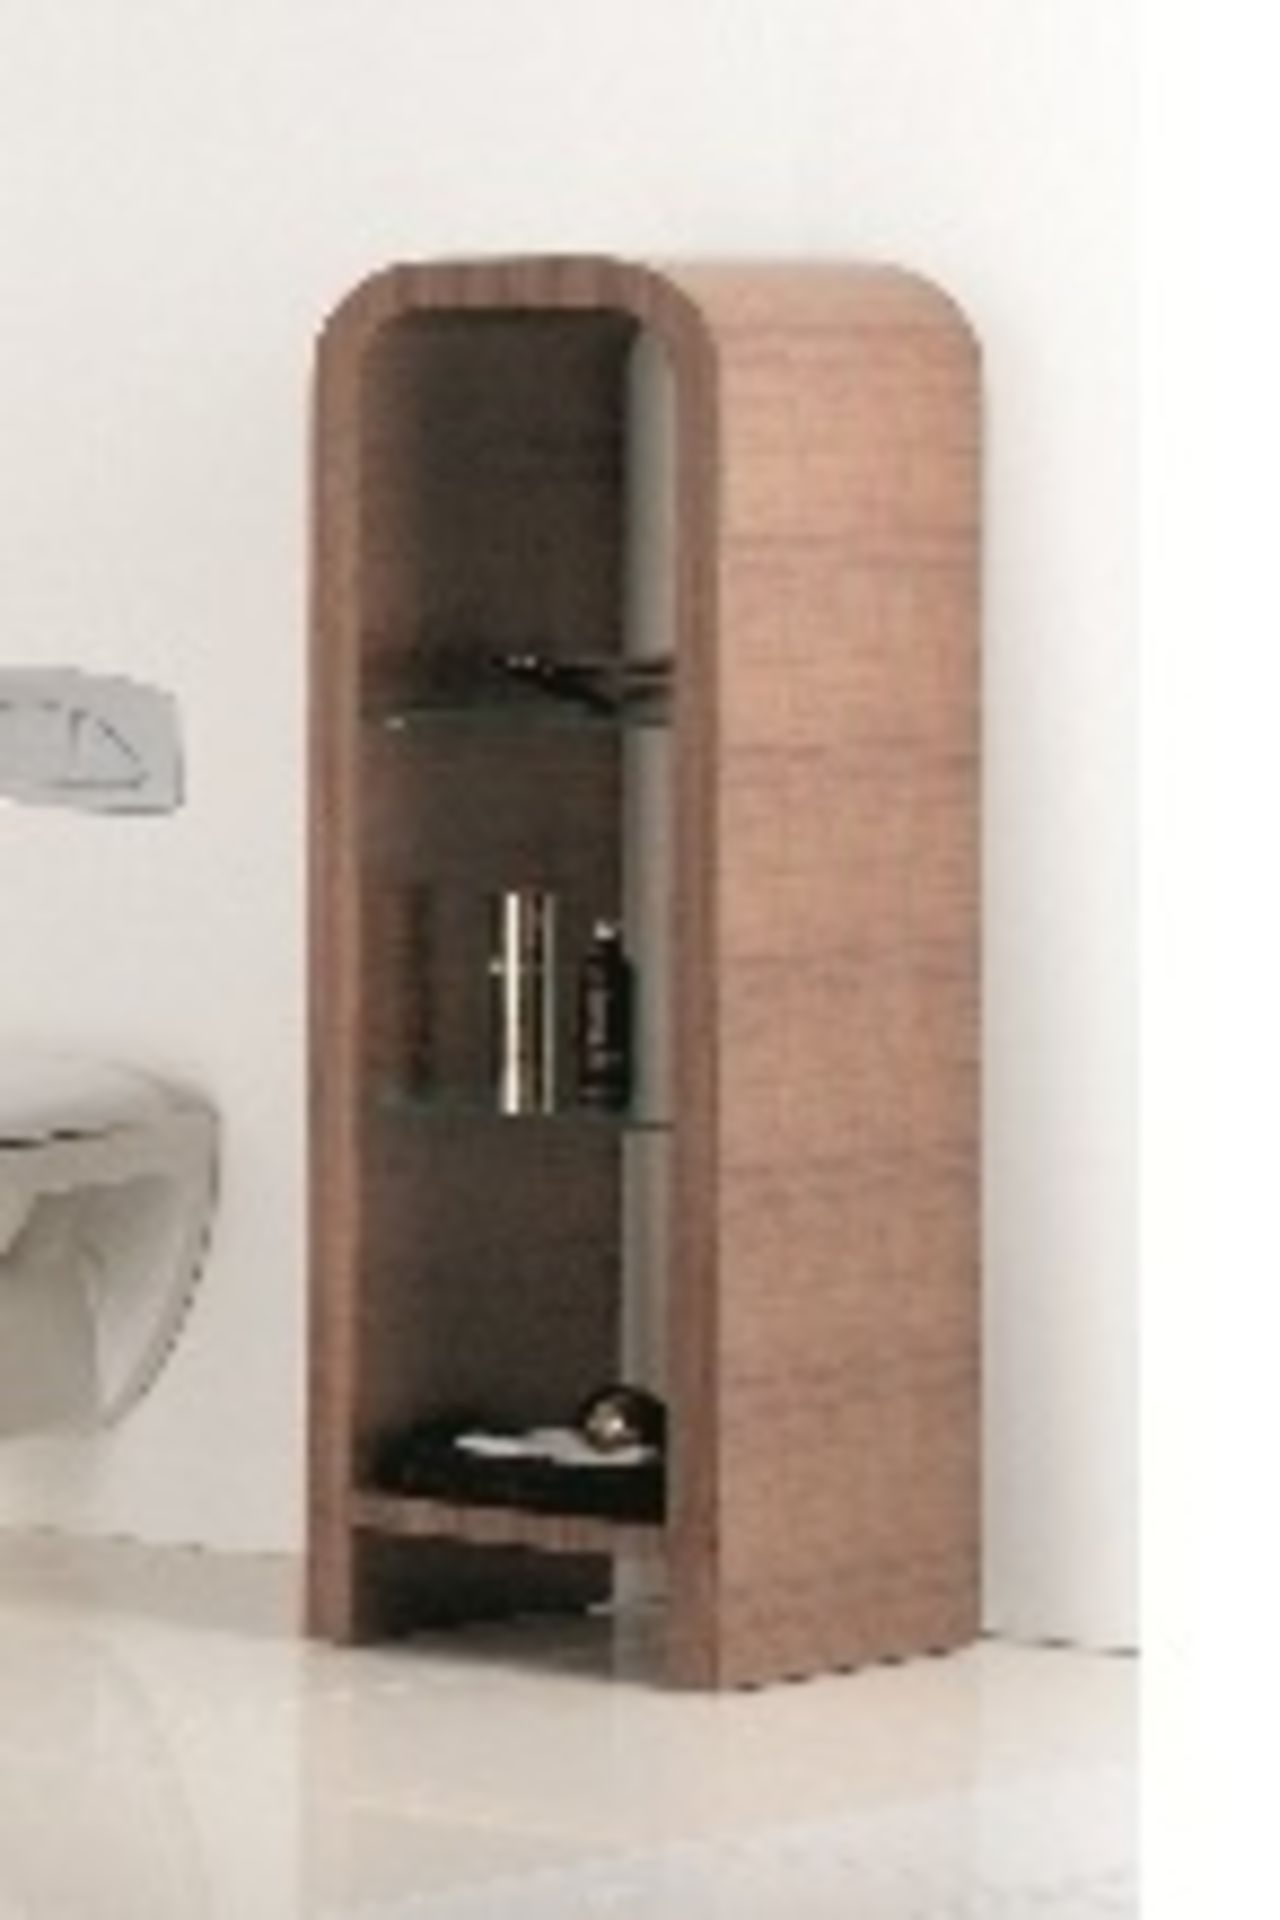 1 x Vogue ARC Series 1 Bathroom GLASS SHELF UNIT - 1400mm Height - NATURAL WALNUT FINISH -